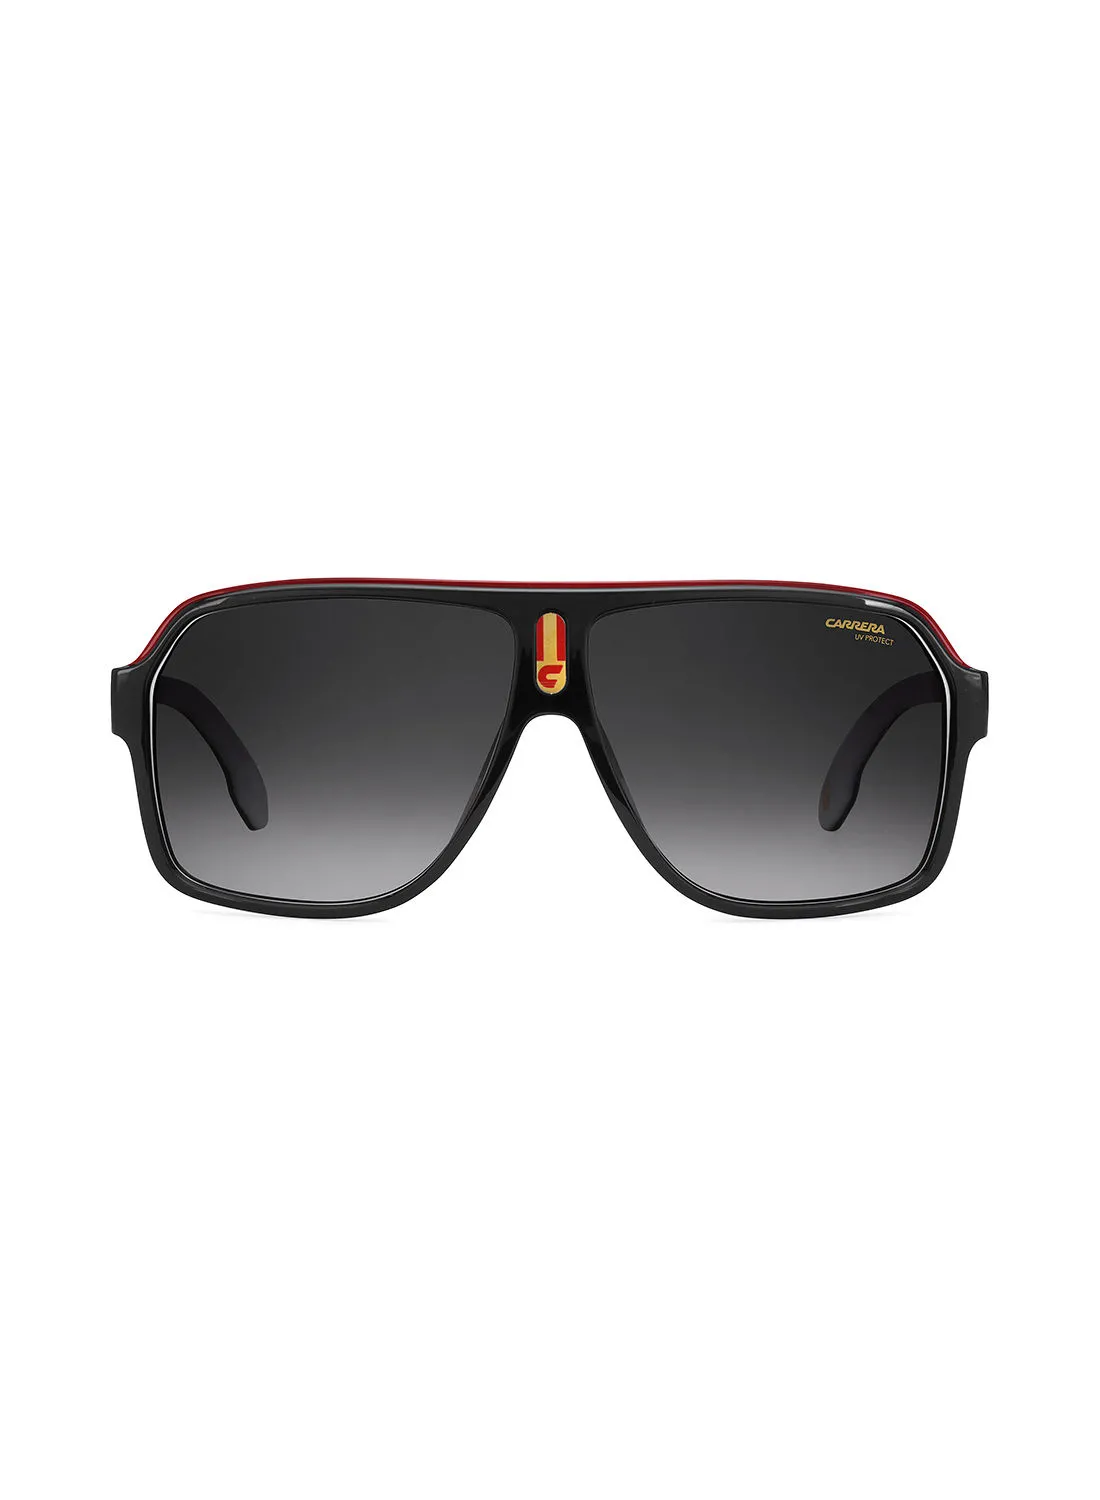 Carrera Men's Full-Rim Rectangular Rx-Able Sunglasses - Lens Size : 62 mm